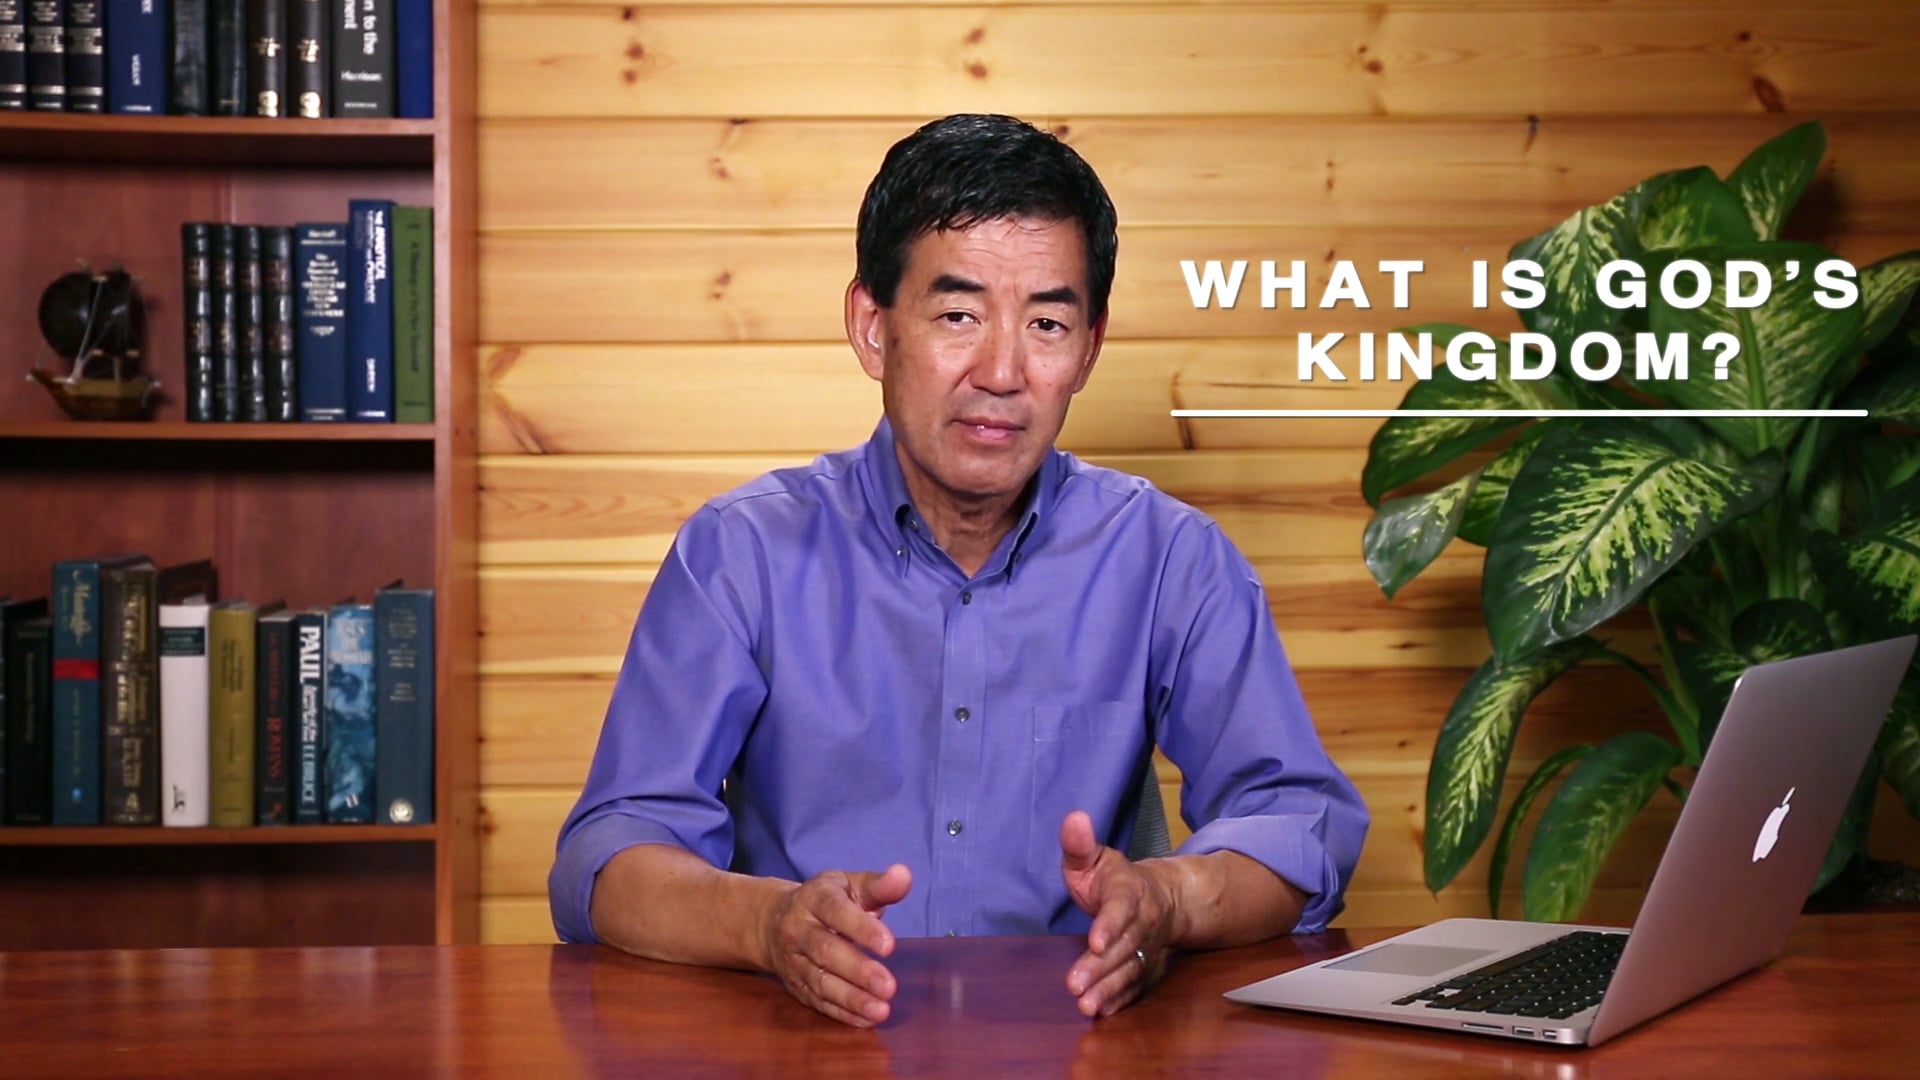 KINGDOM - Session 1 - What is God's Kingdom?